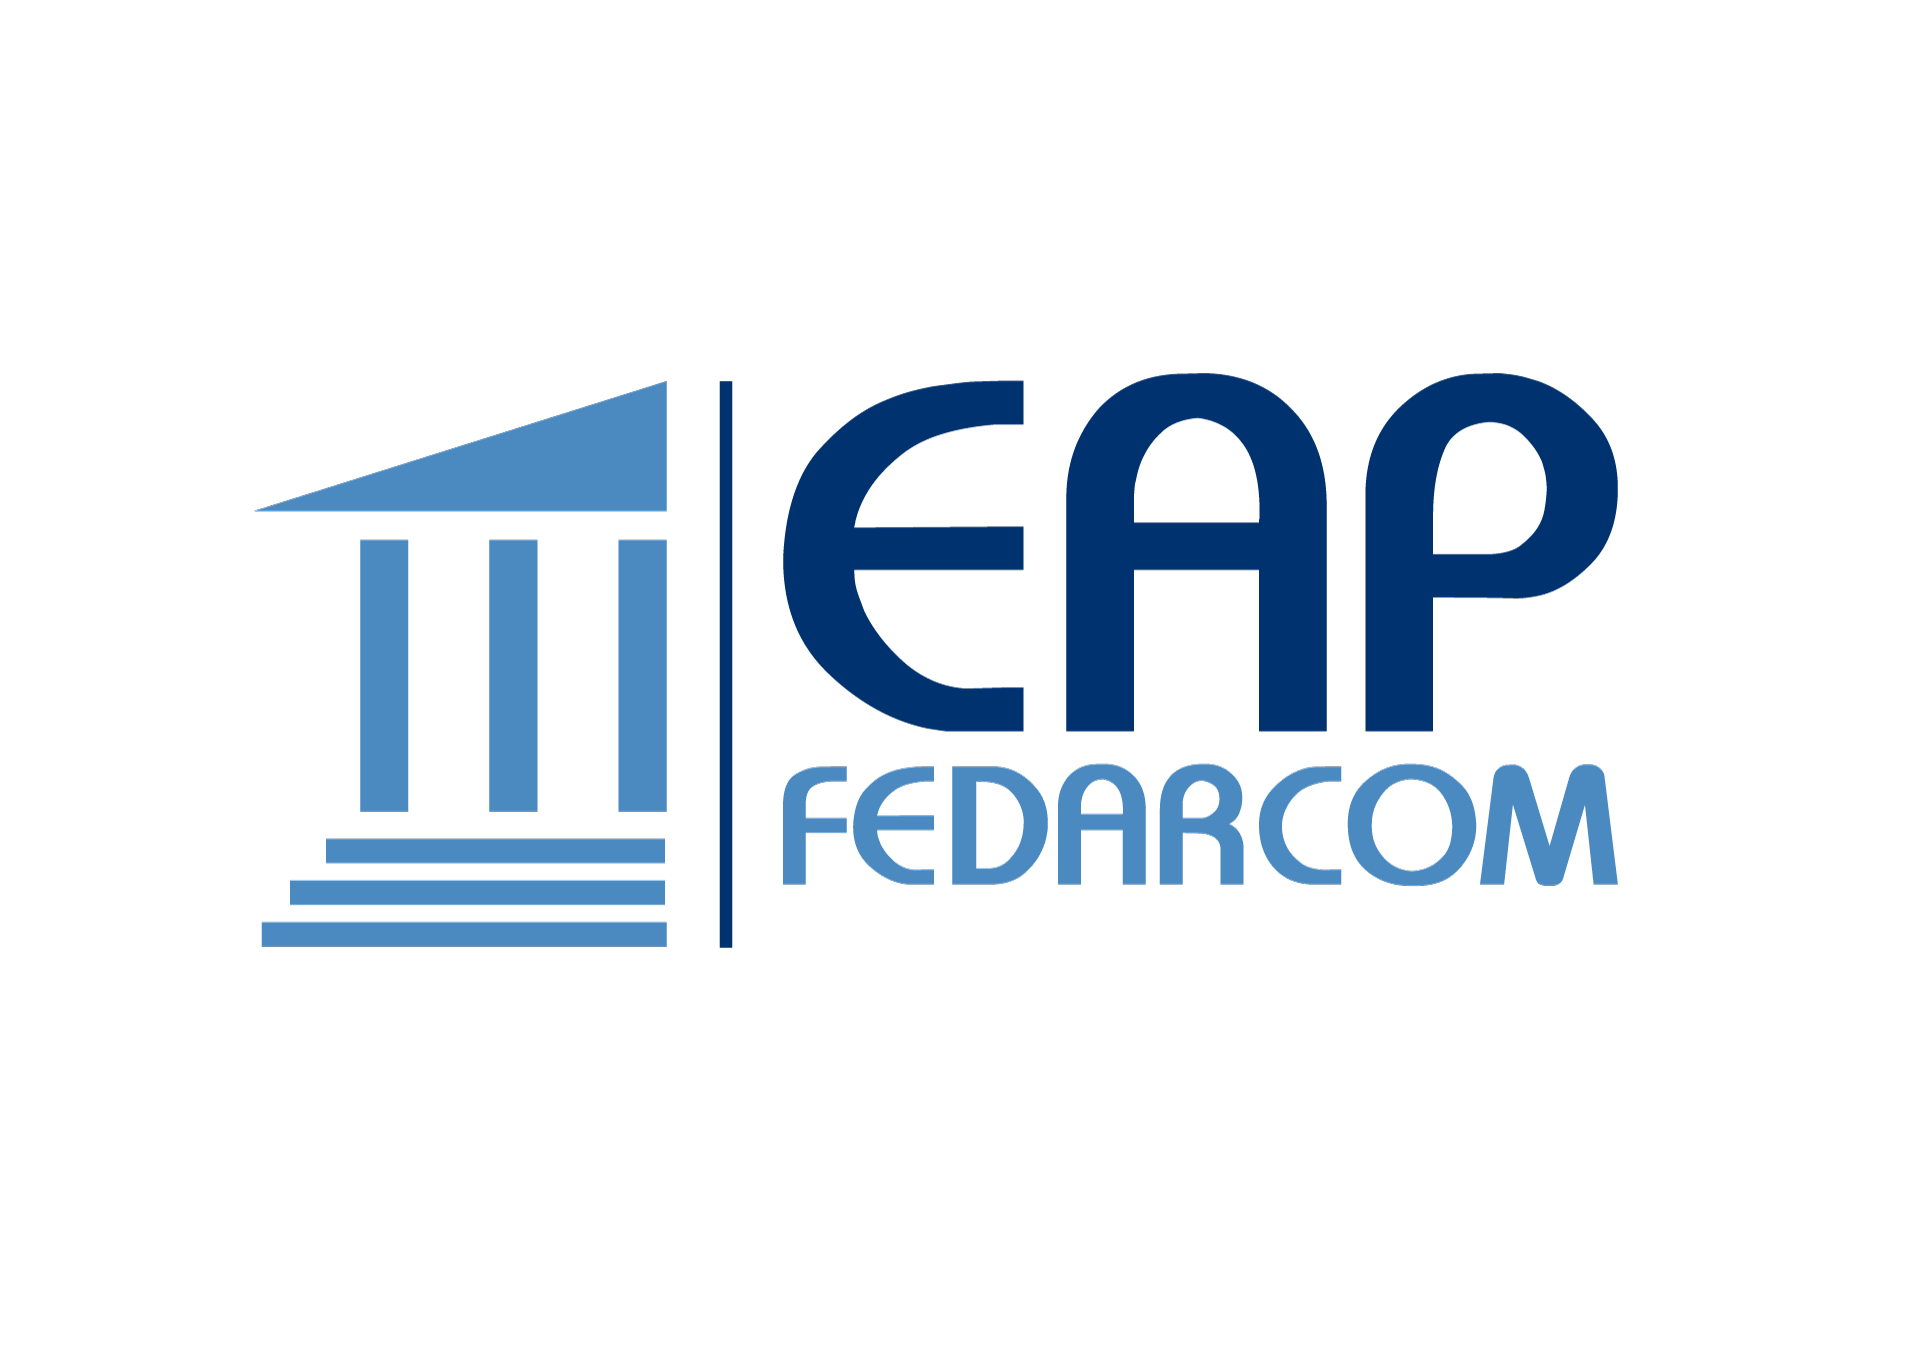 logo-eap